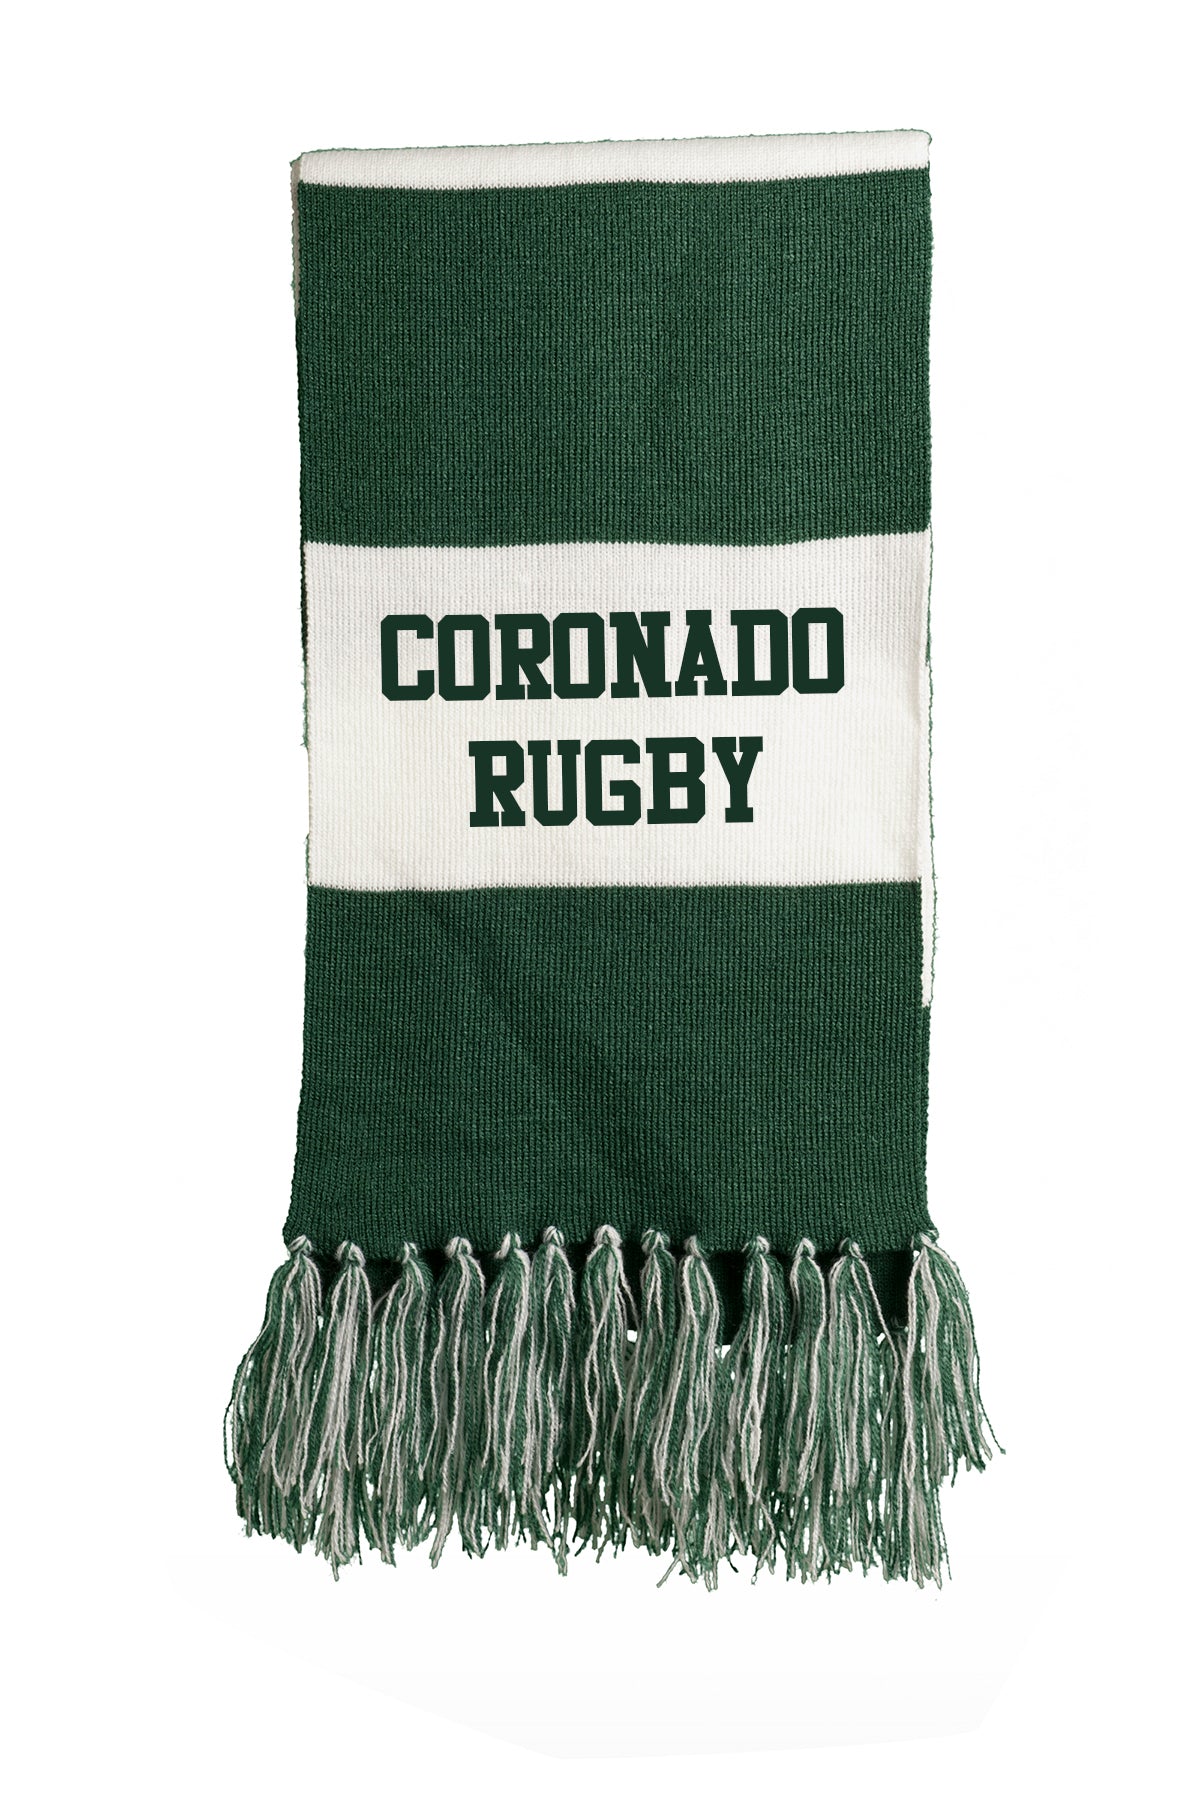 Coronado Rugby Scarf